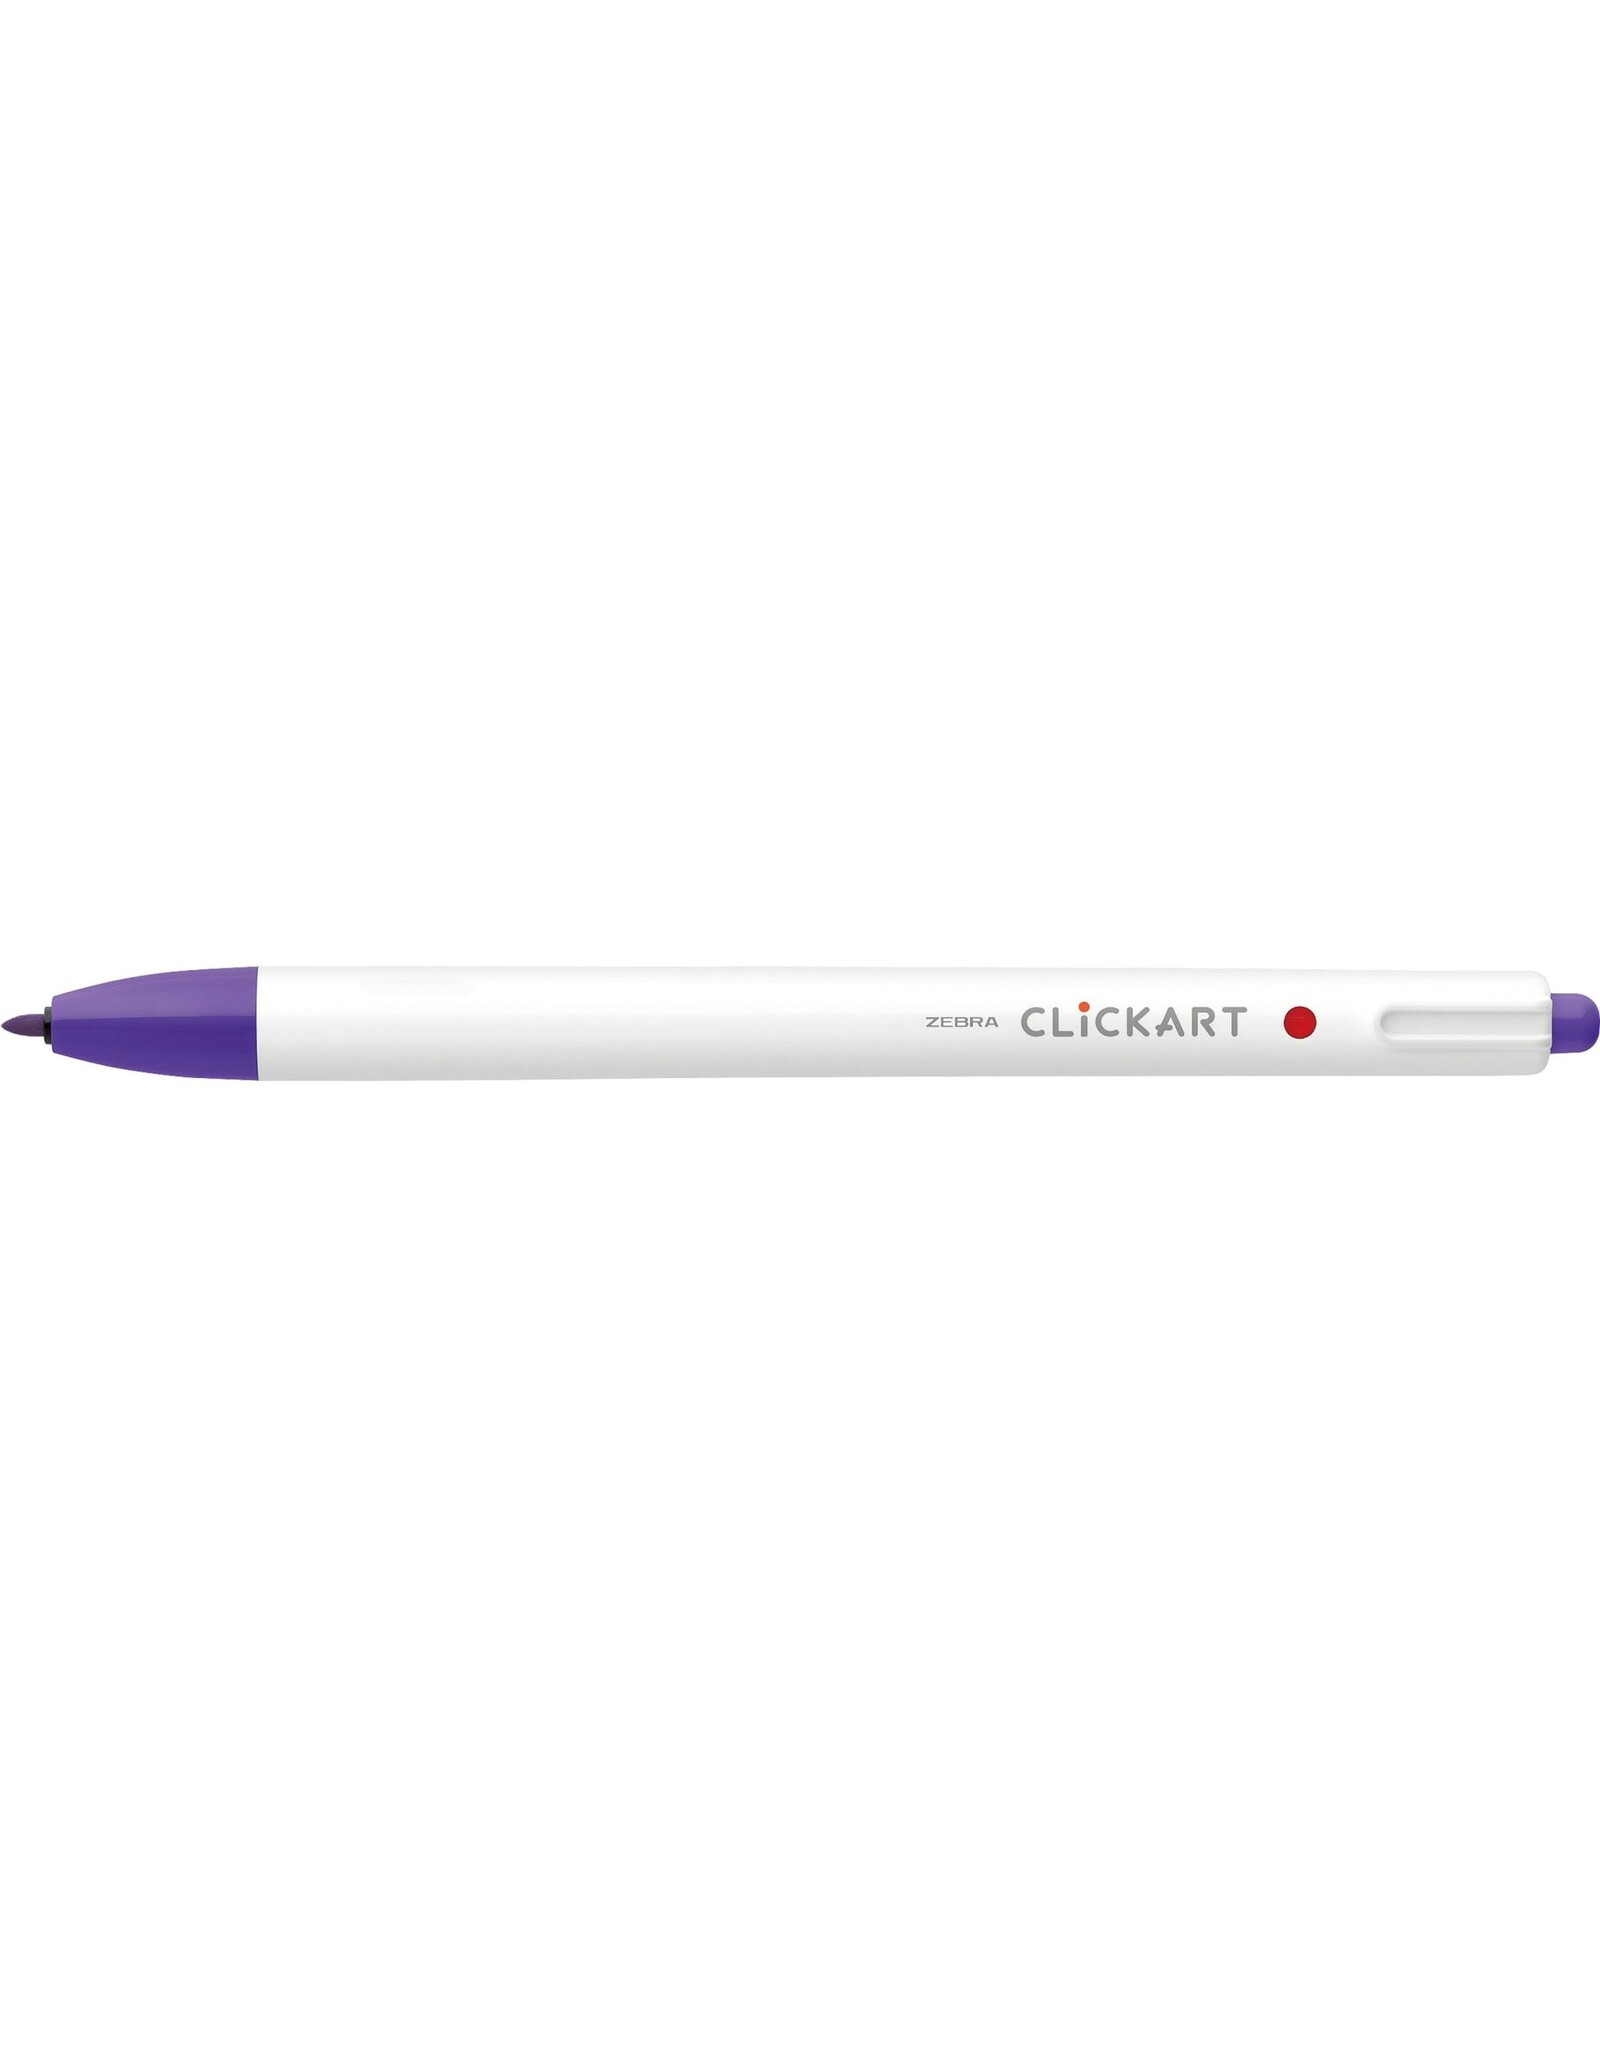 https://cdn.shoplightspeed.com/shops/636894/files/54752150/1600x2048x2/zebra-clickart-retractable-marker-pen-purple-f.jpg